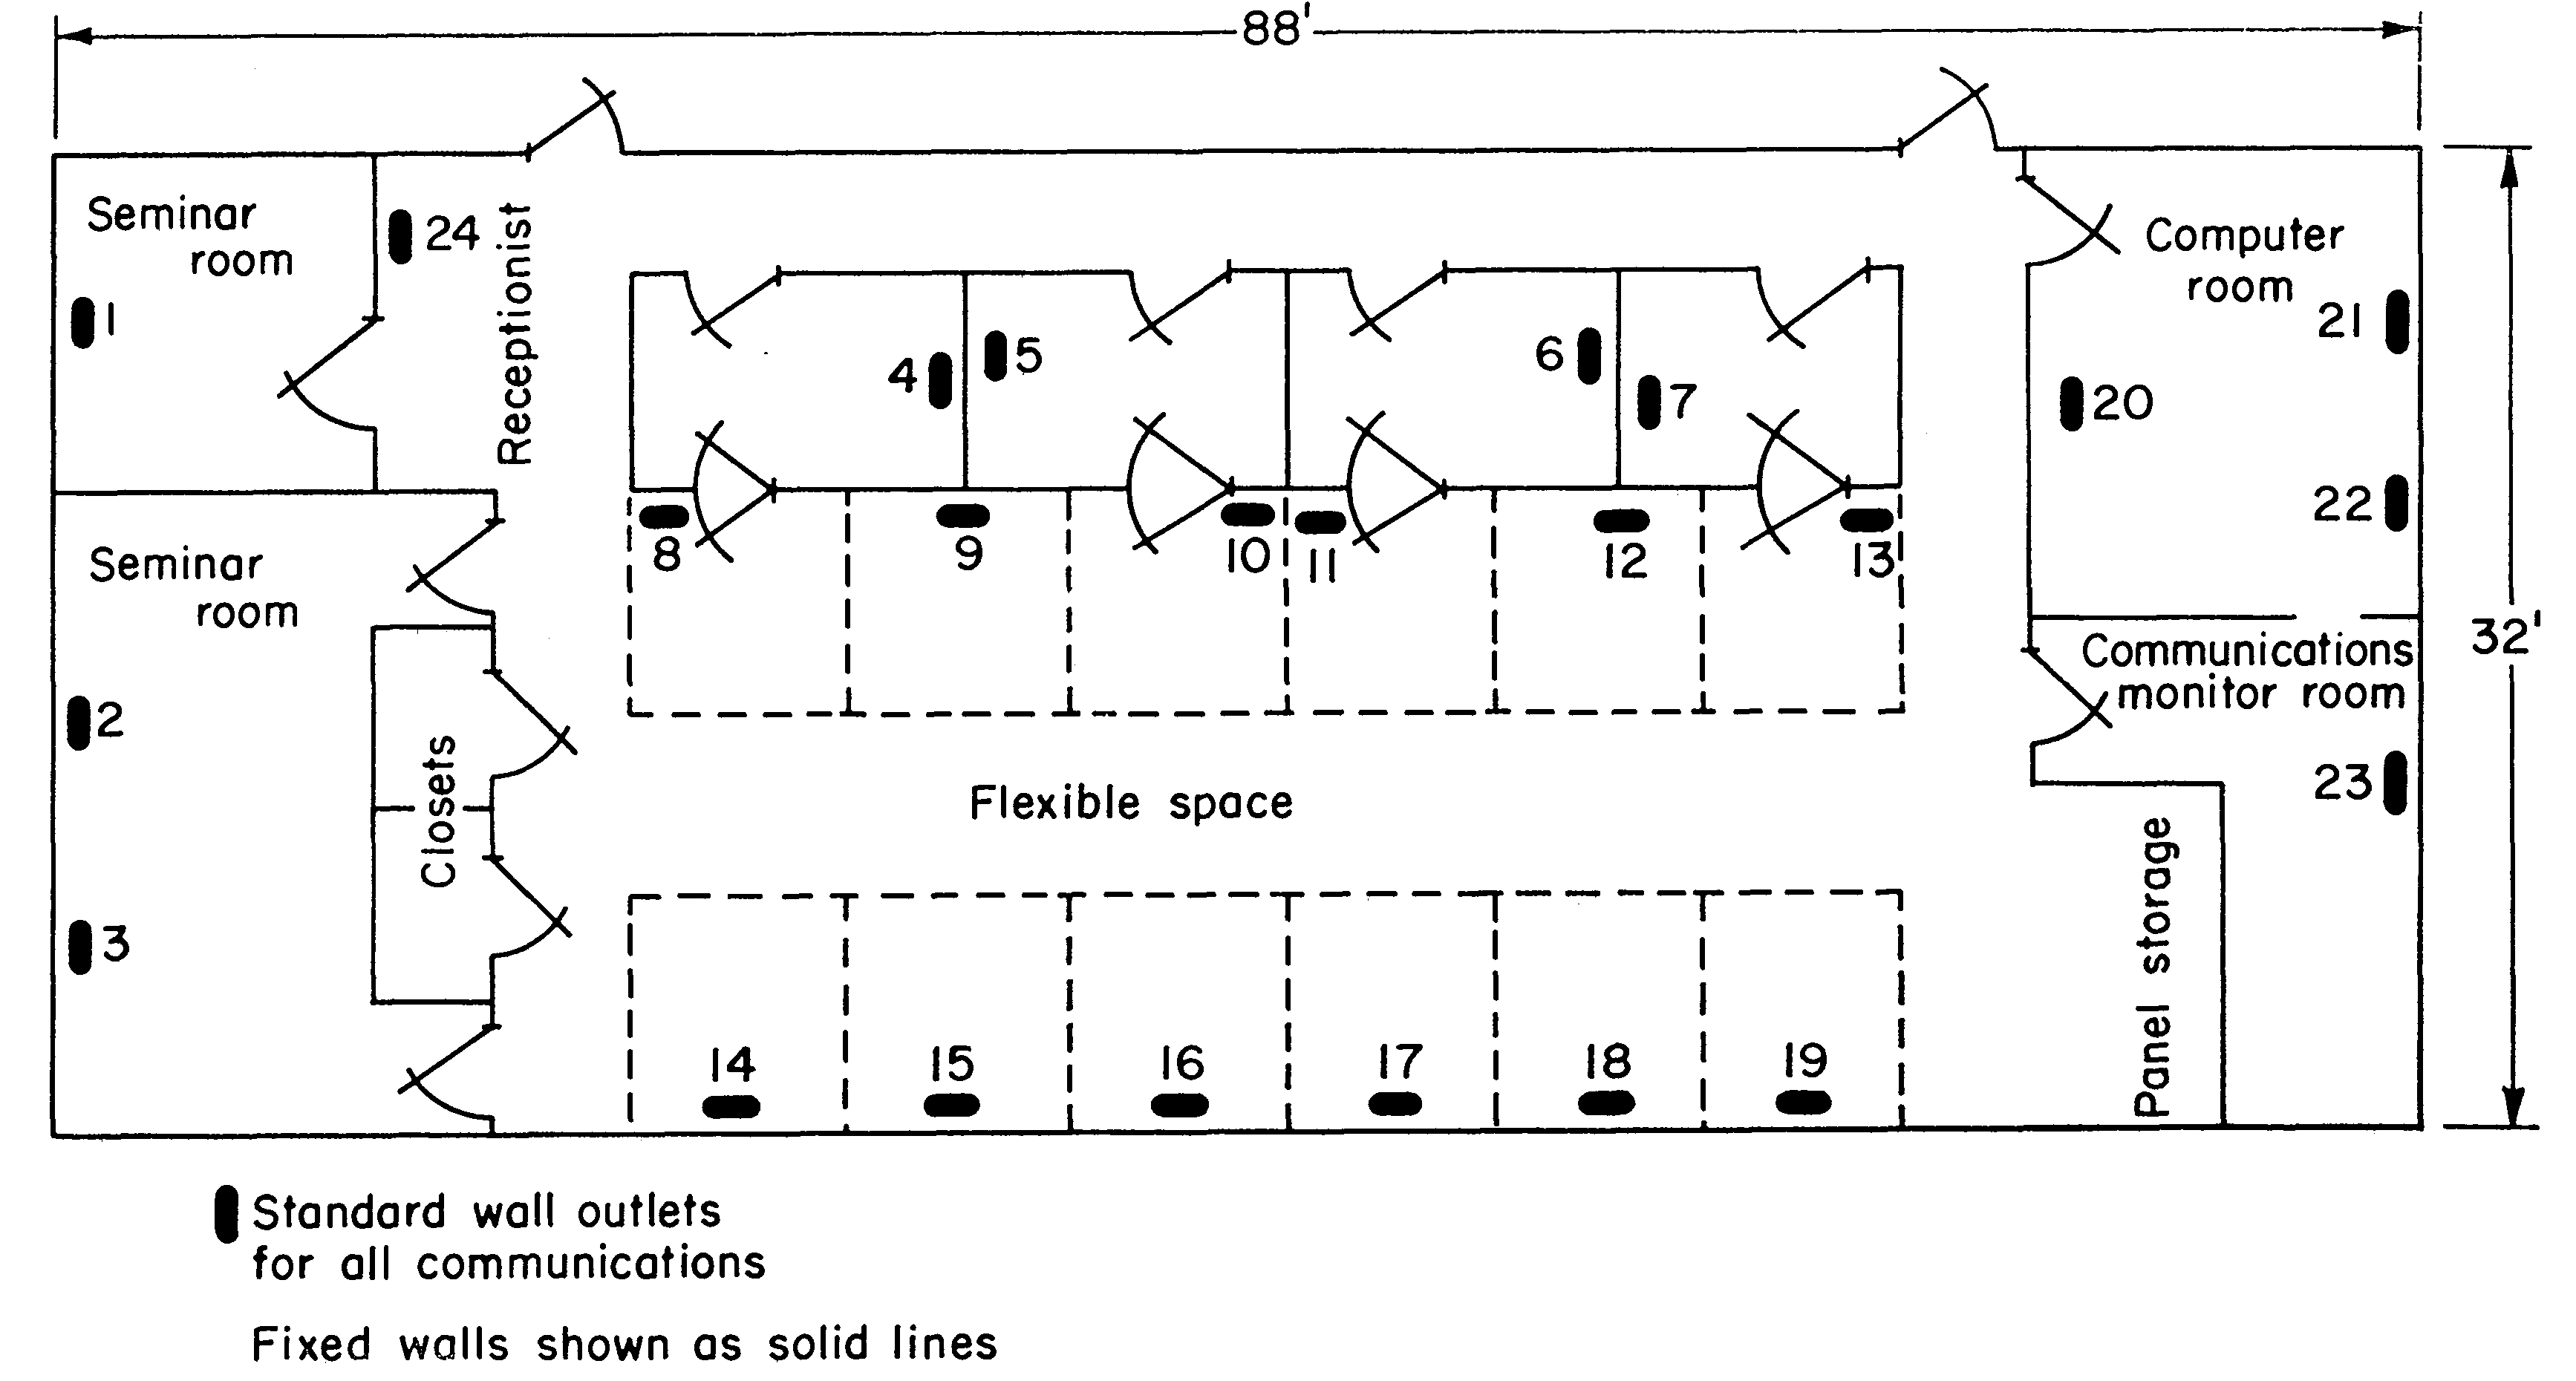 Floor plan of Management Science Laboratory